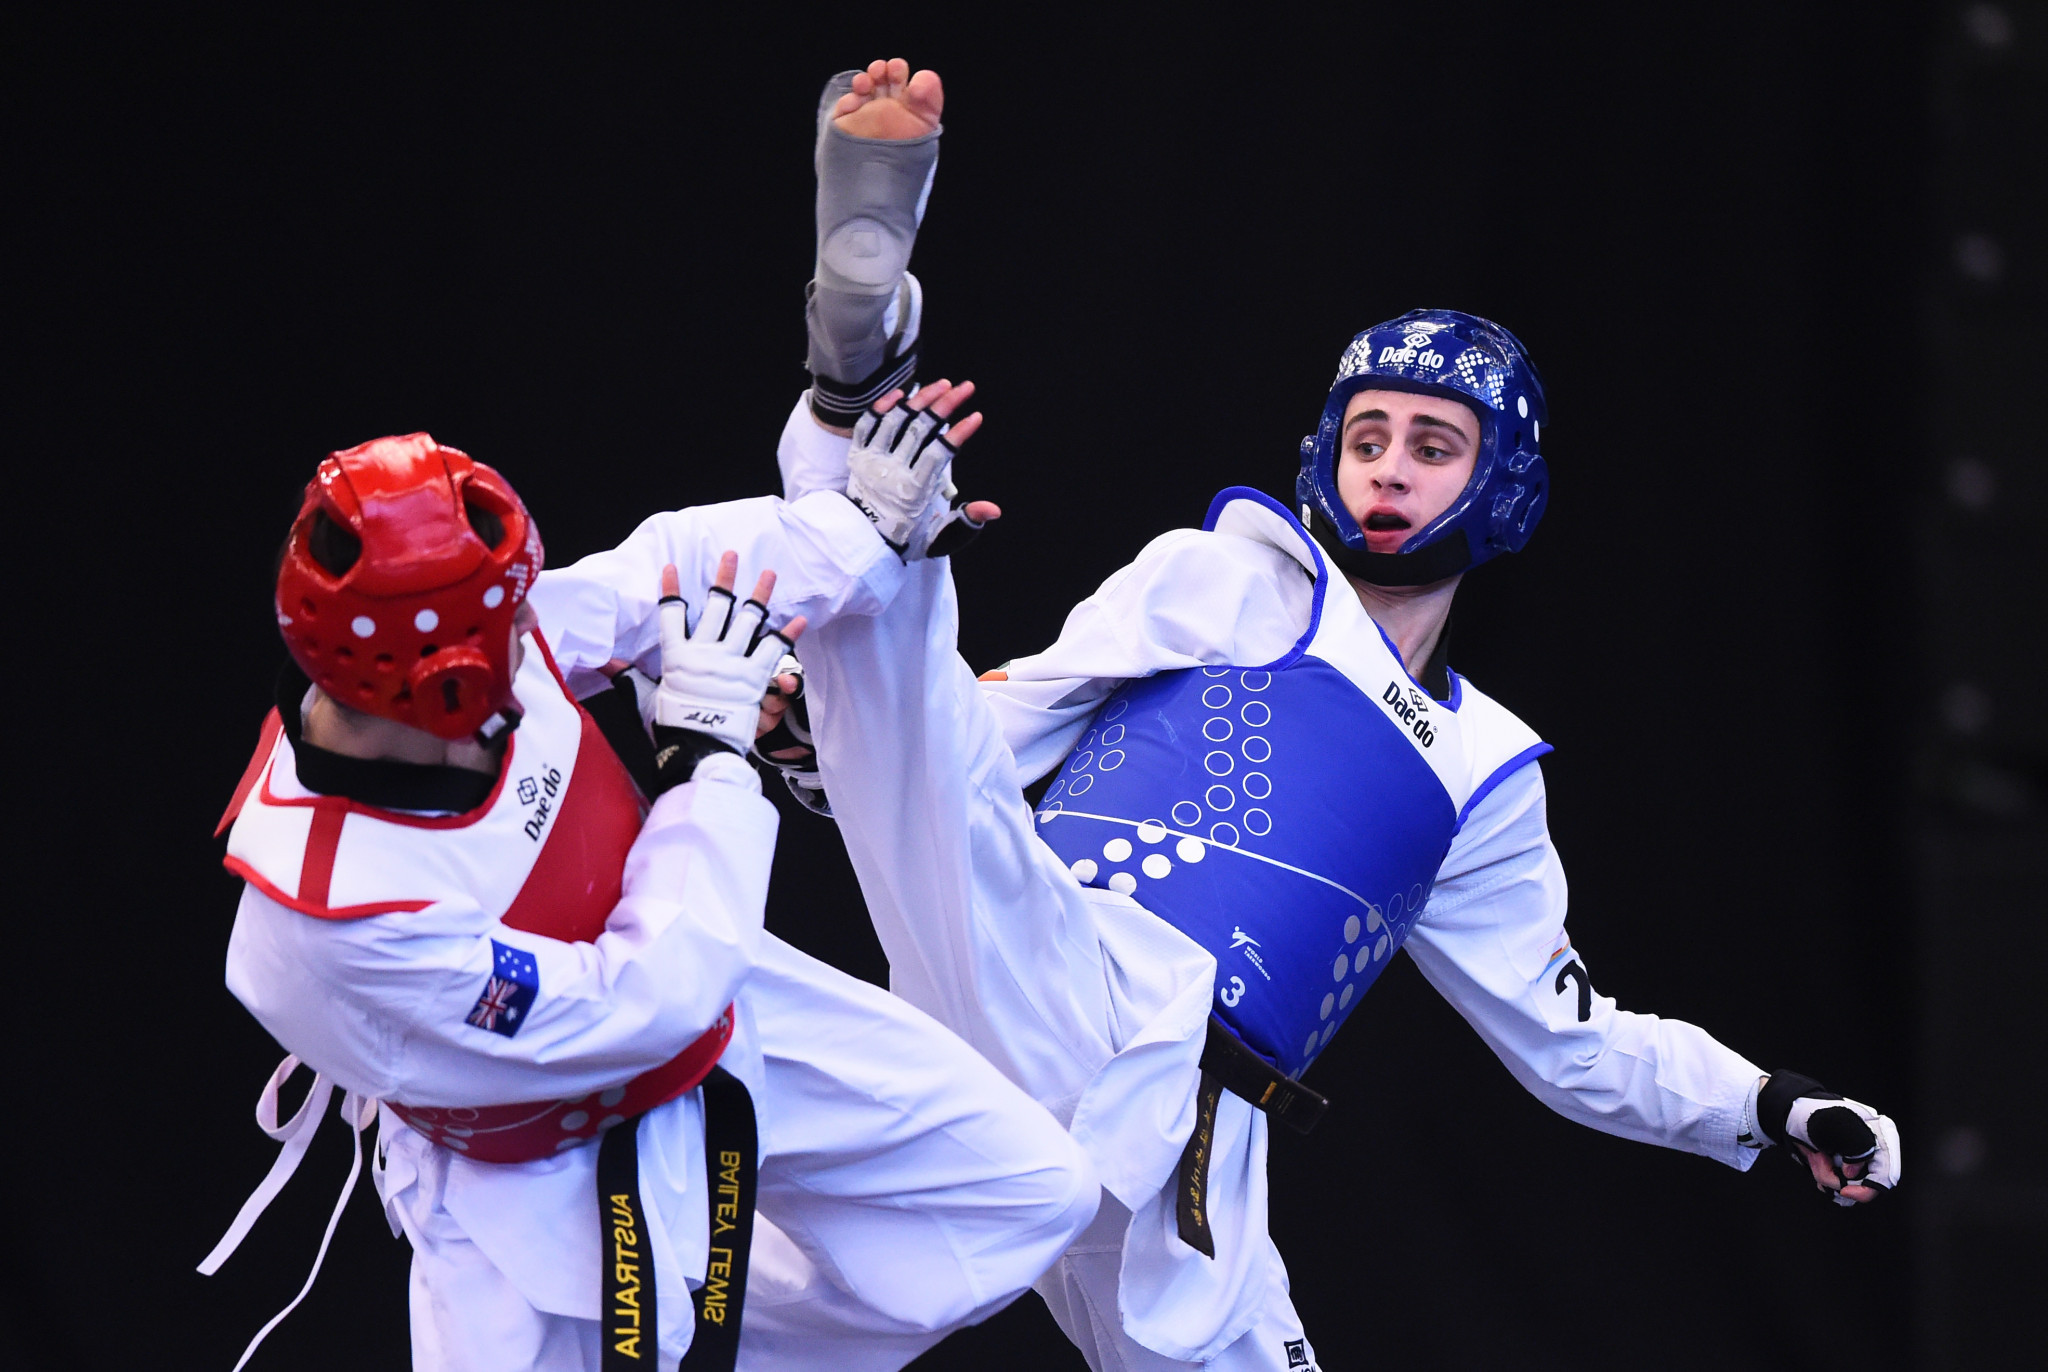 Funding boost for Australian Taekwondo after exceeding World Championship targets